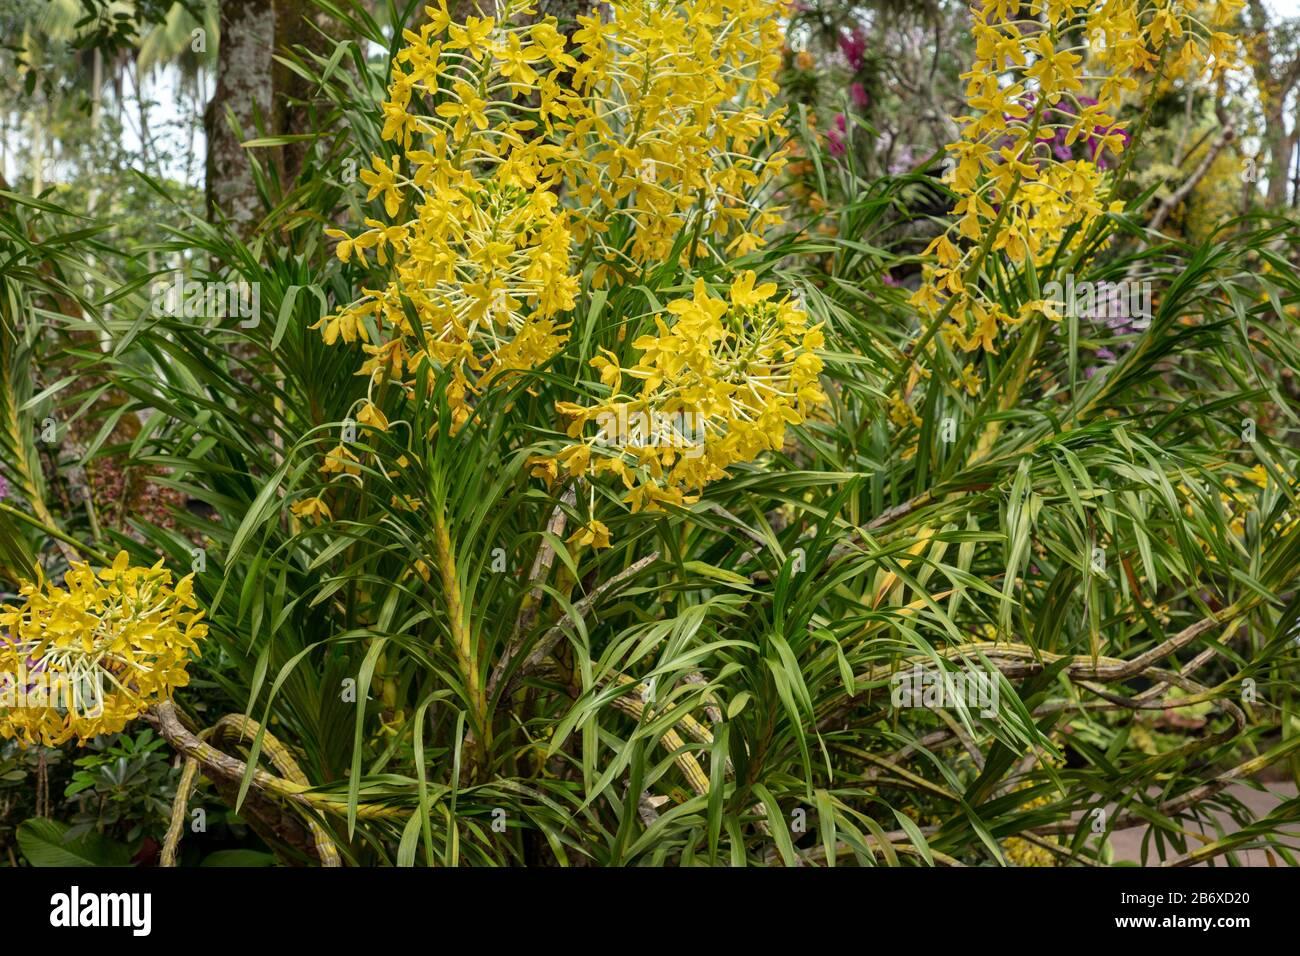 orchid-grammatophyllum-speciosum-seen-outdoors-in-singapore-botanical-garden-2B6XD20.jpg